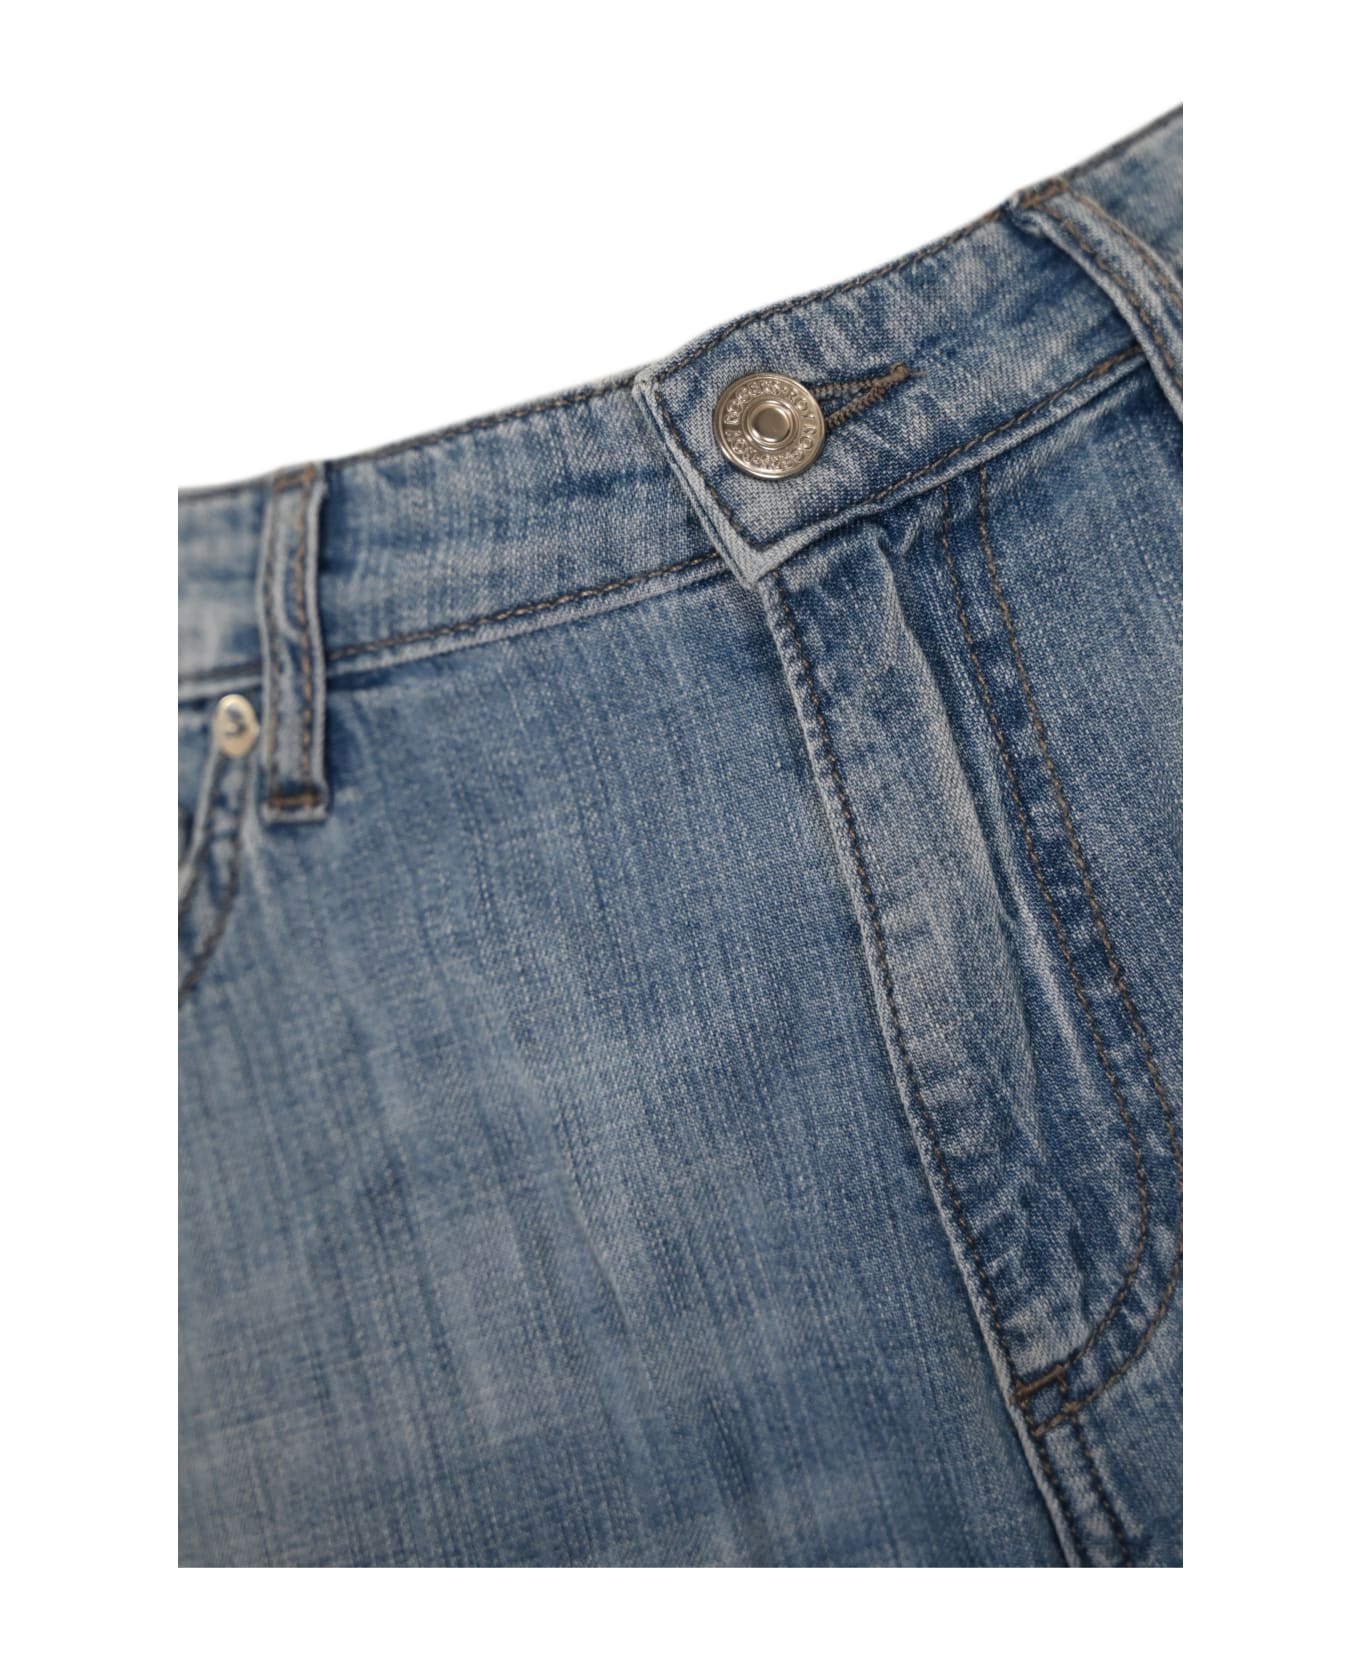 Roy Rogers Straight Cotton Jeans - Denim